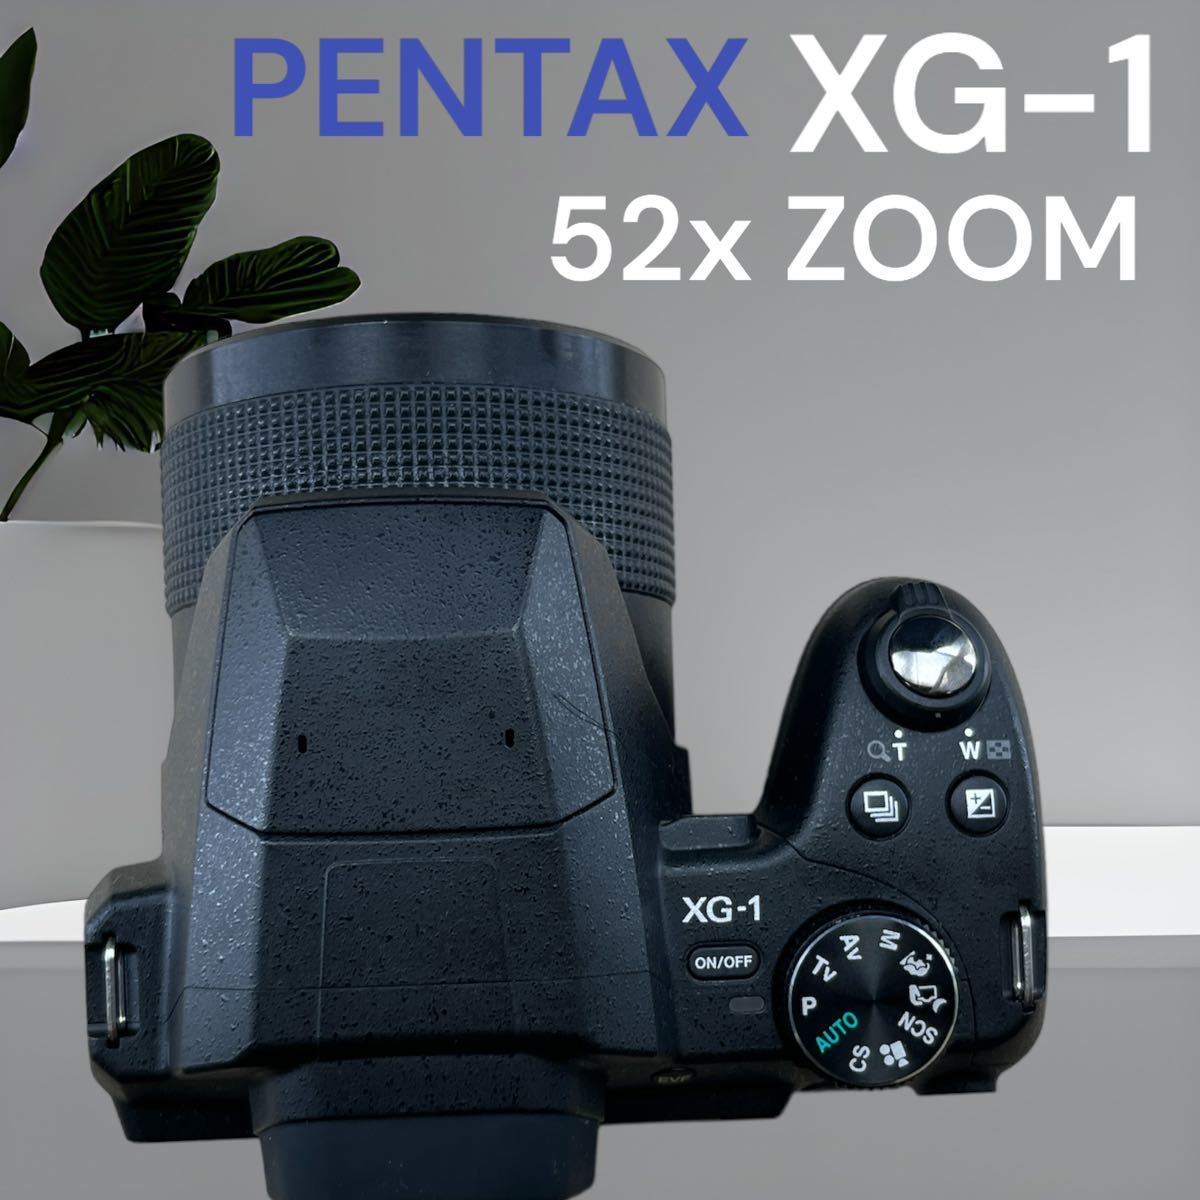 『52倍ズーム ネオ一眼』PENTAX XG-1 smc PENTAX 4.3-223.6mm 1:2.8-5.6 動作 美品 _画像4